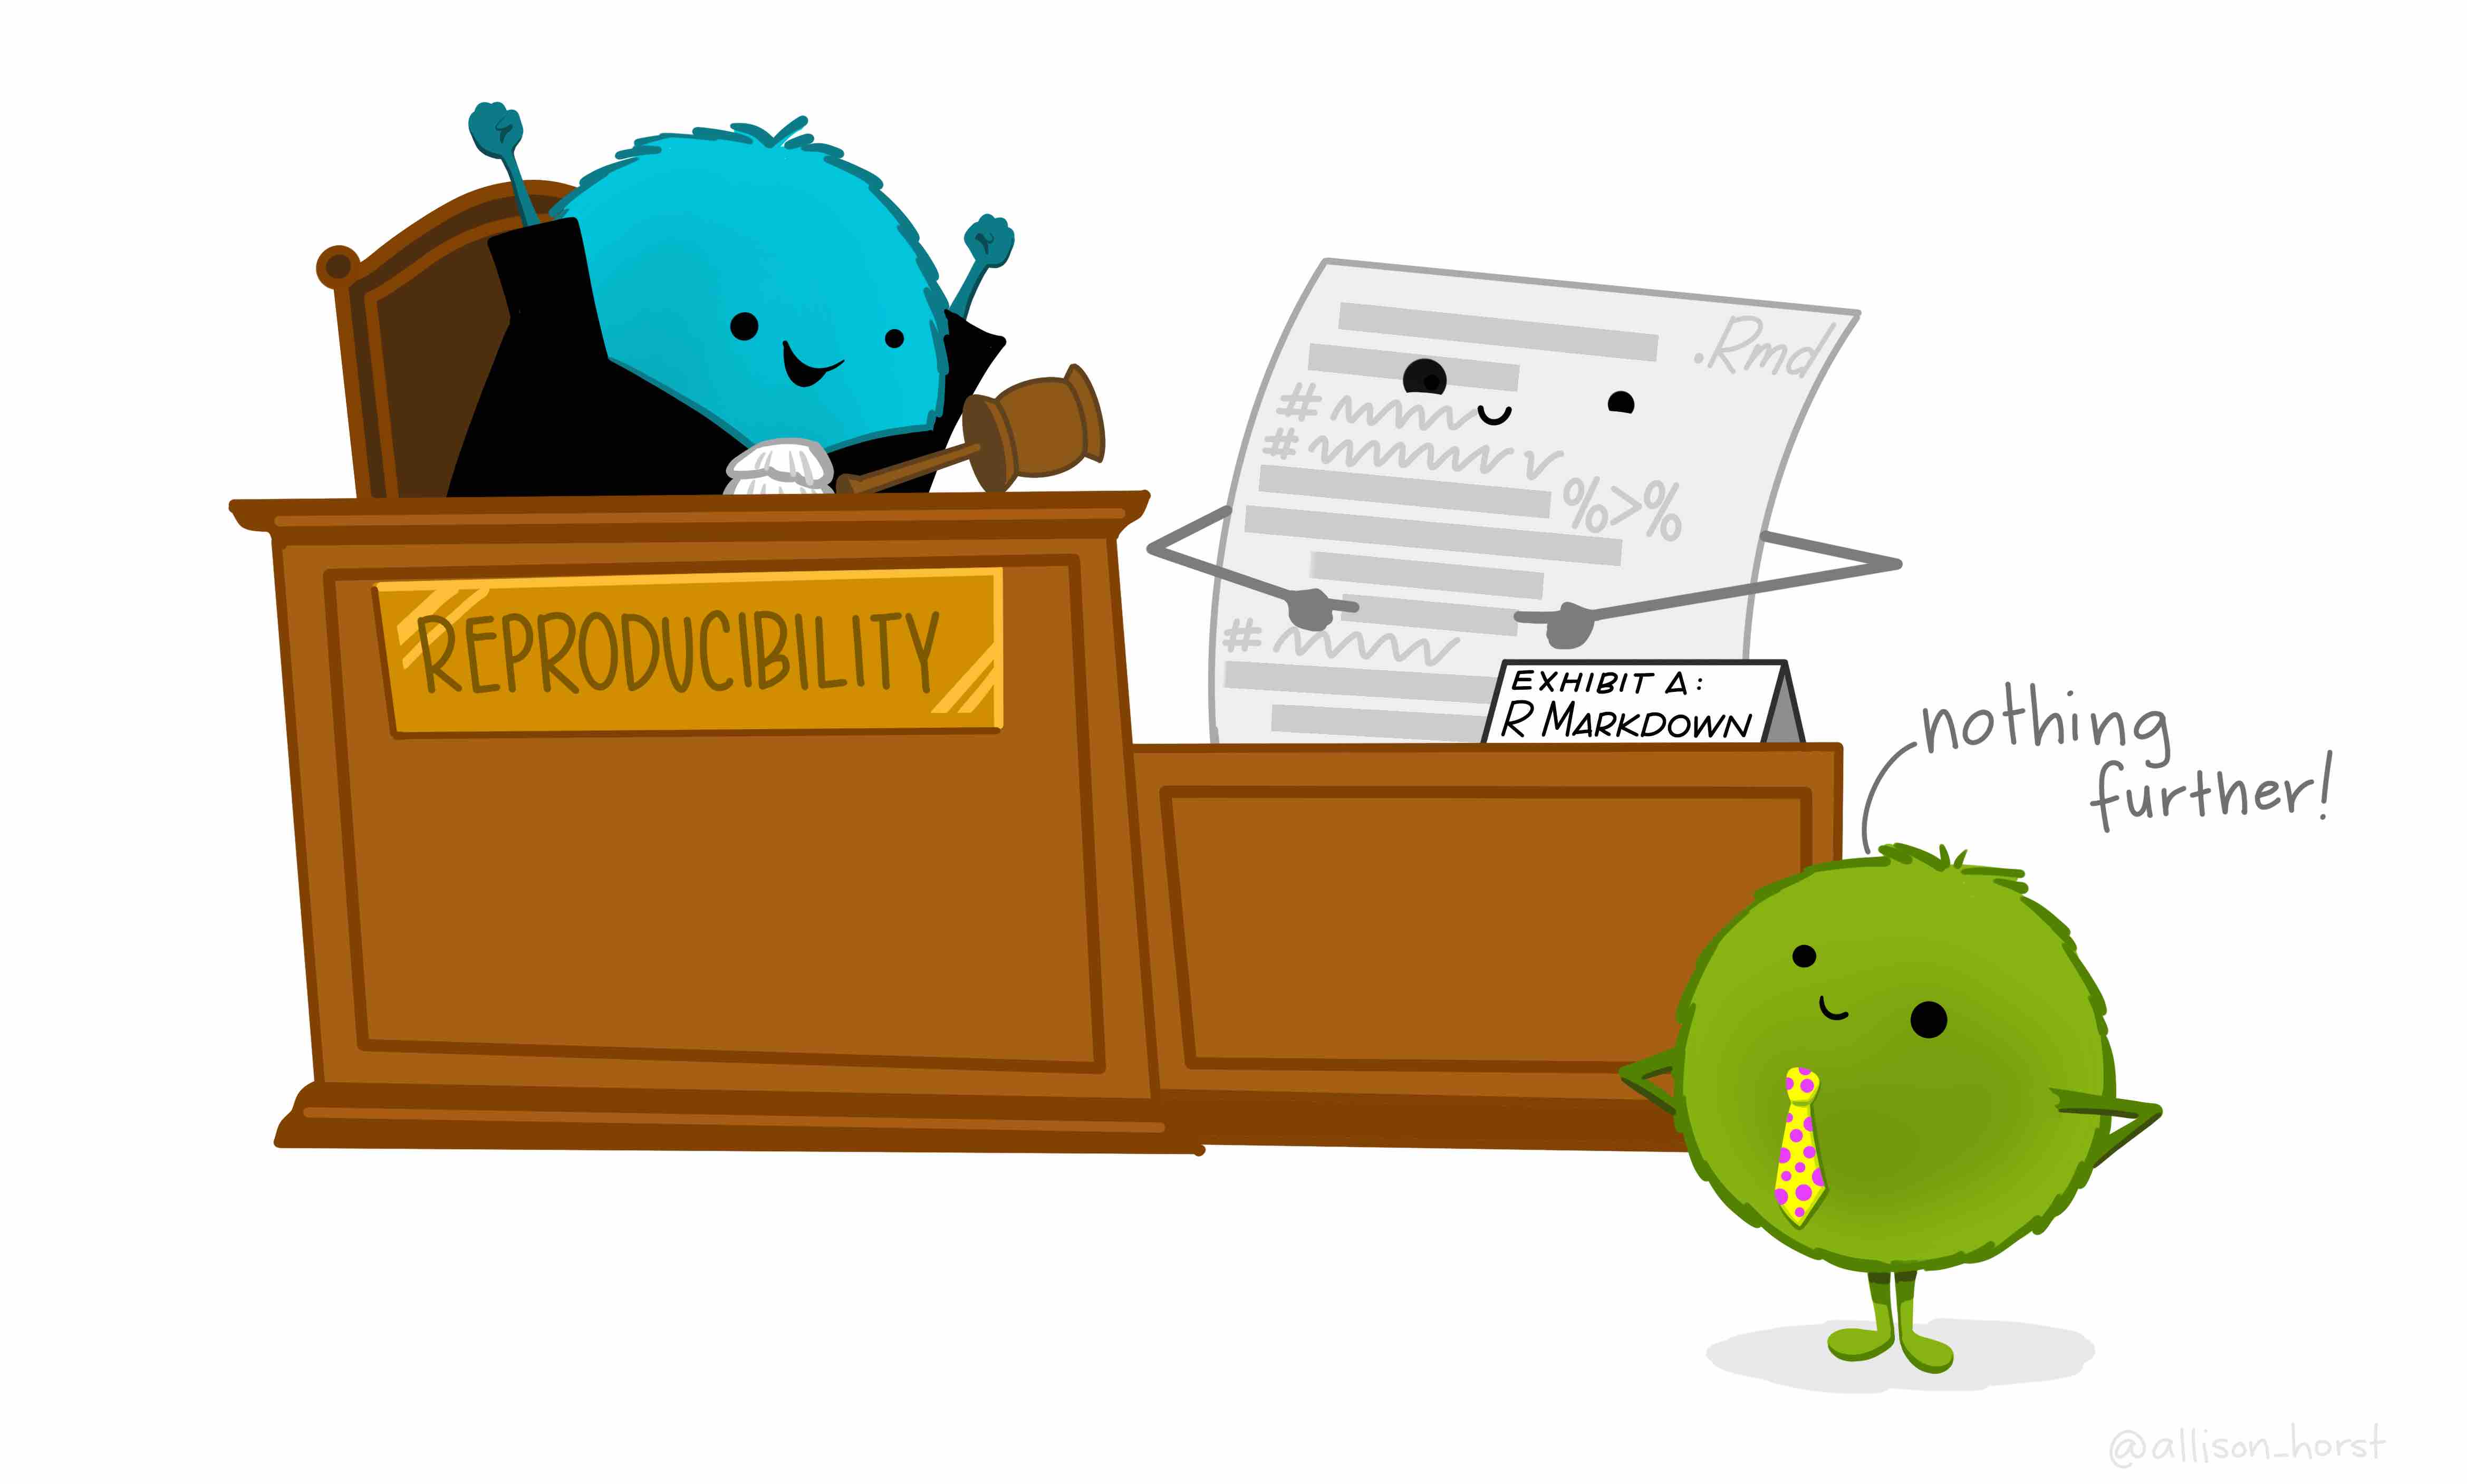 Defense at the reproducibility court (graphic by [Allison Horst](https://github.com/allisonhorst)).